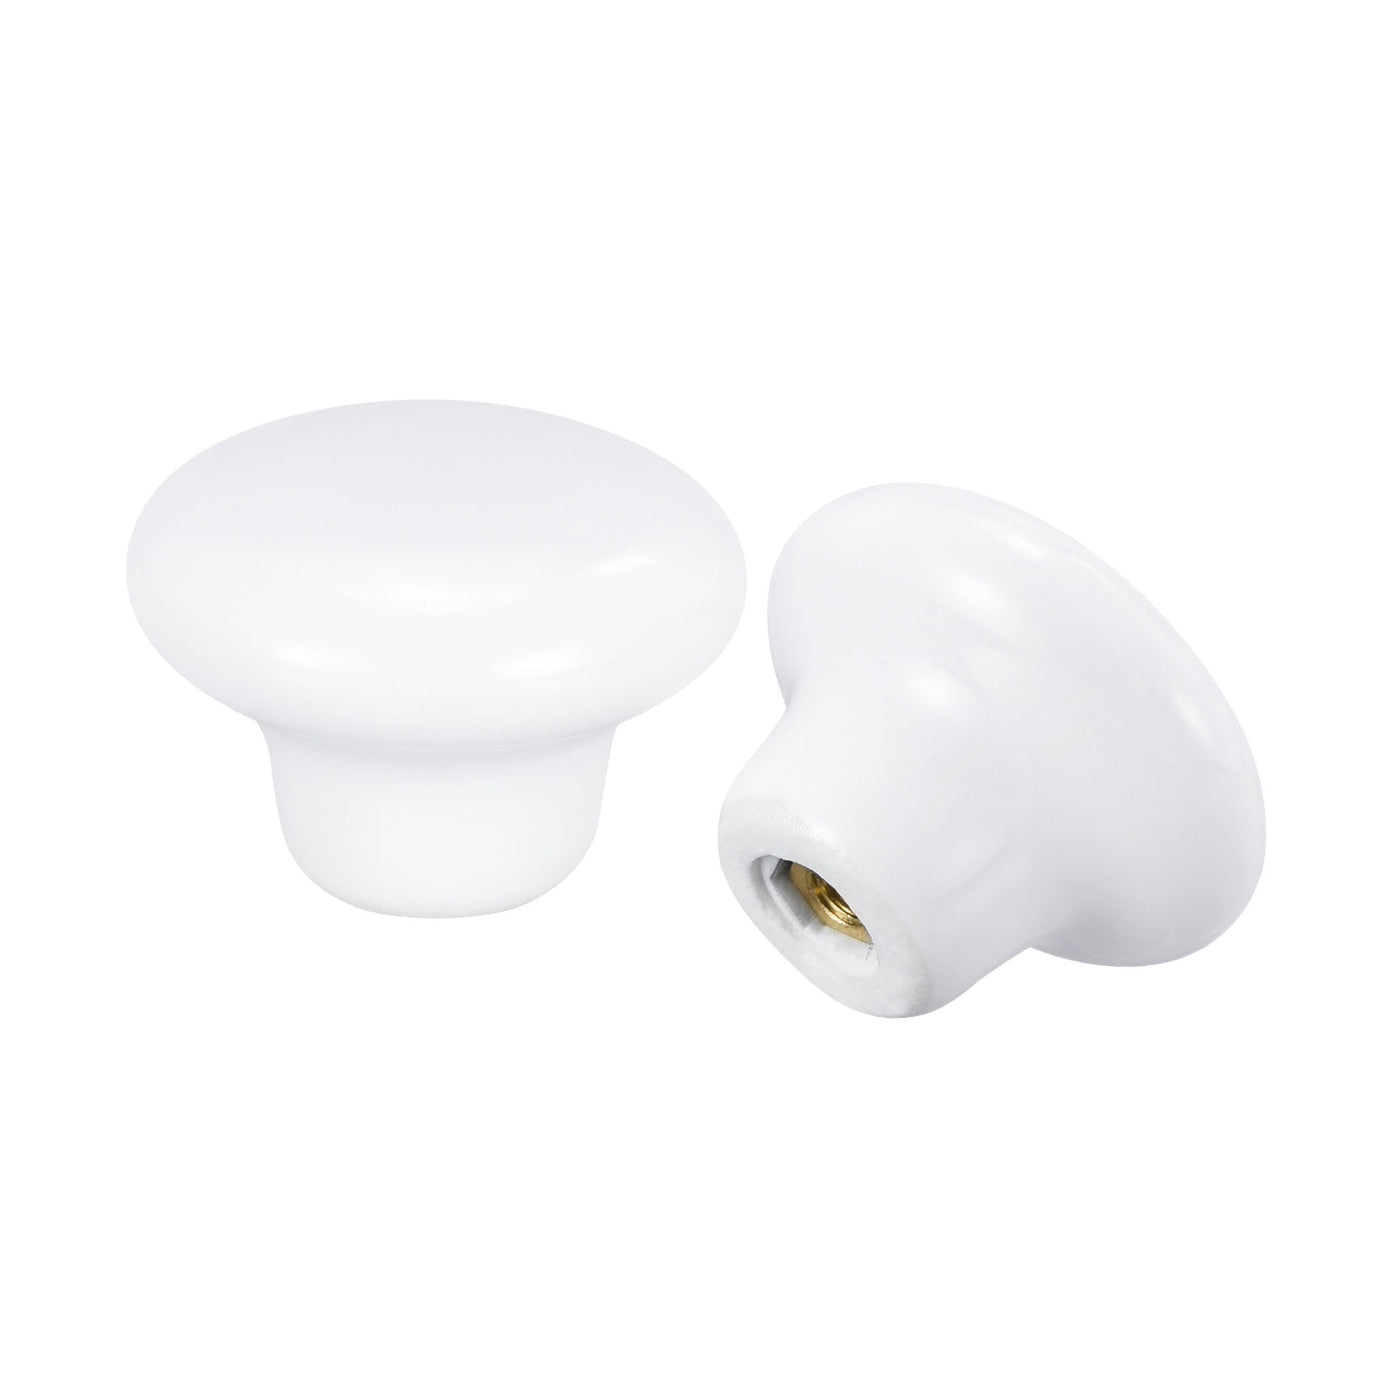 uxcell Uxcell 32x24mm Ceramic Drawer Knobs, 5pcs Mushroom Shape Door Pull Handles White